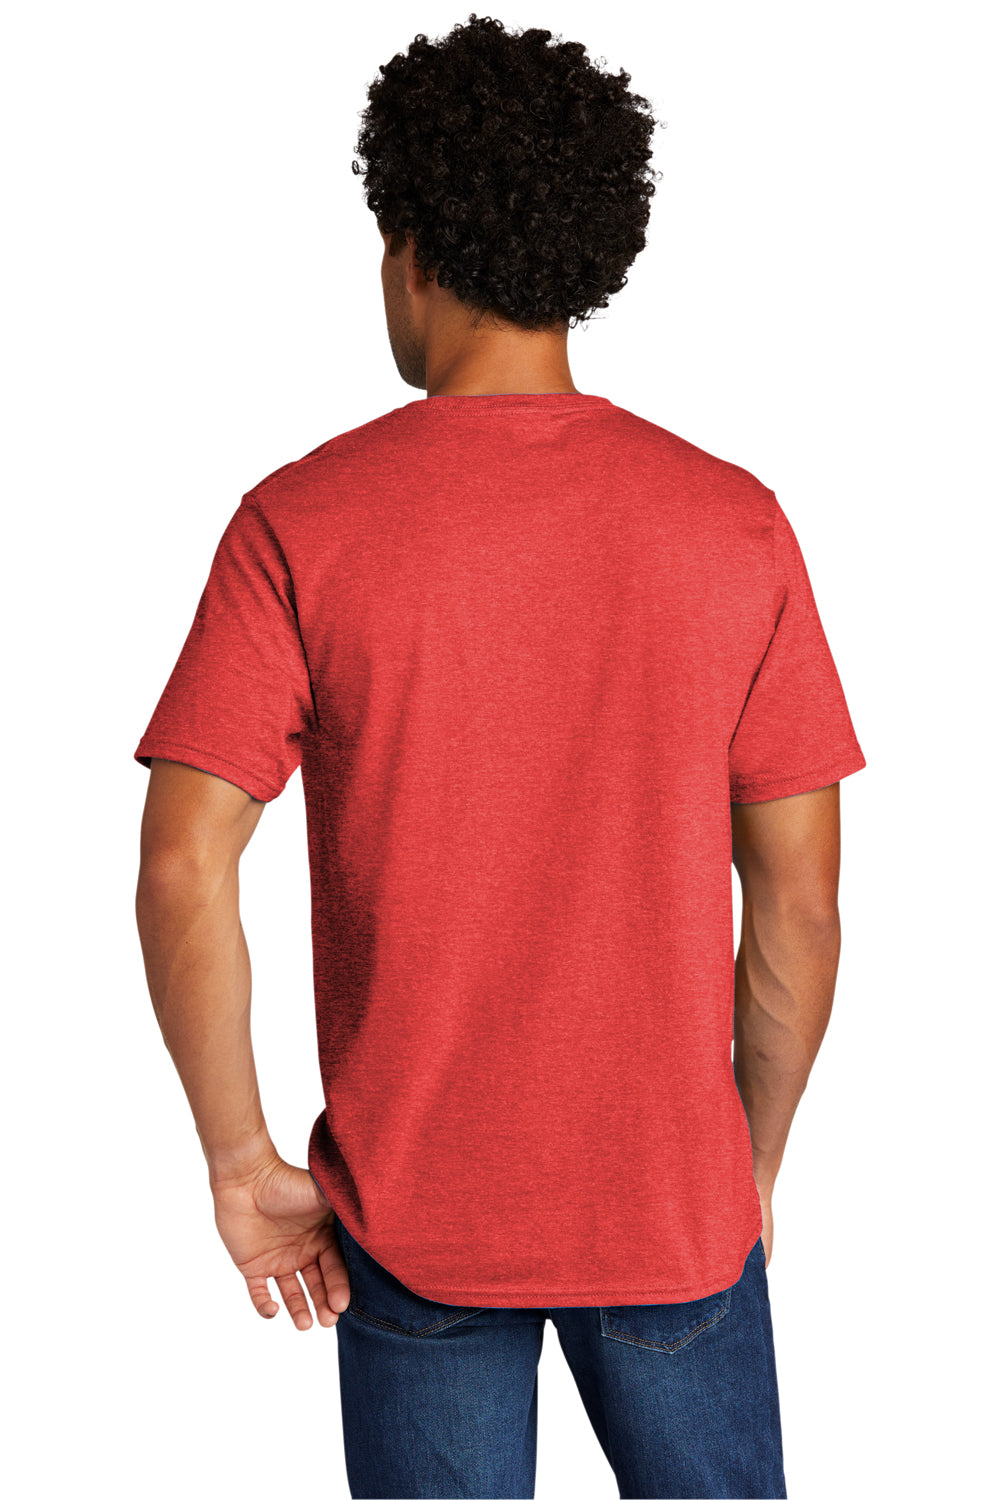 Port & Company Mens Short Sleeve Crewneck T-Shirt Heather Bright Red Side